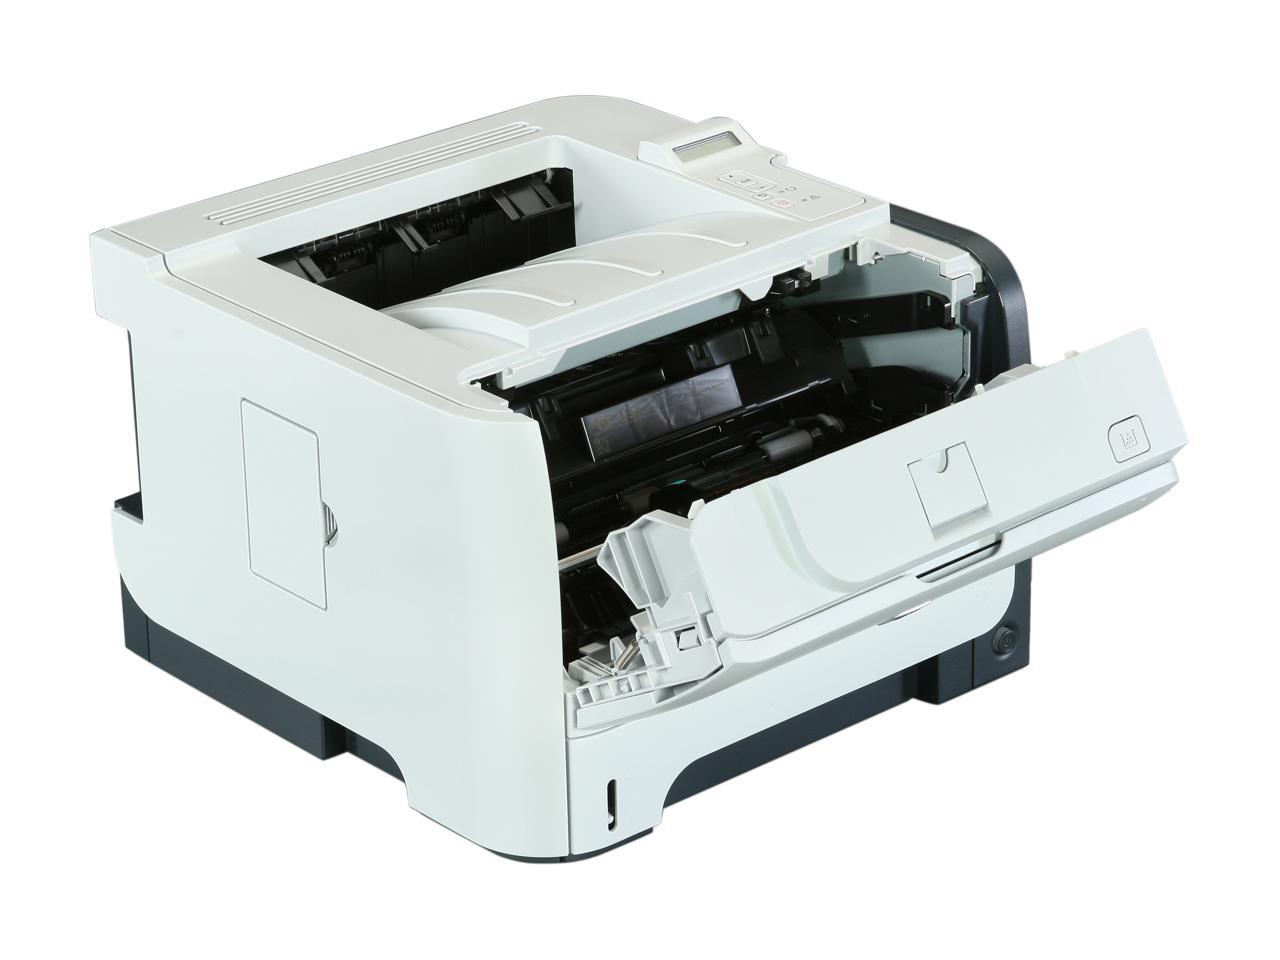 p2055dn printer review